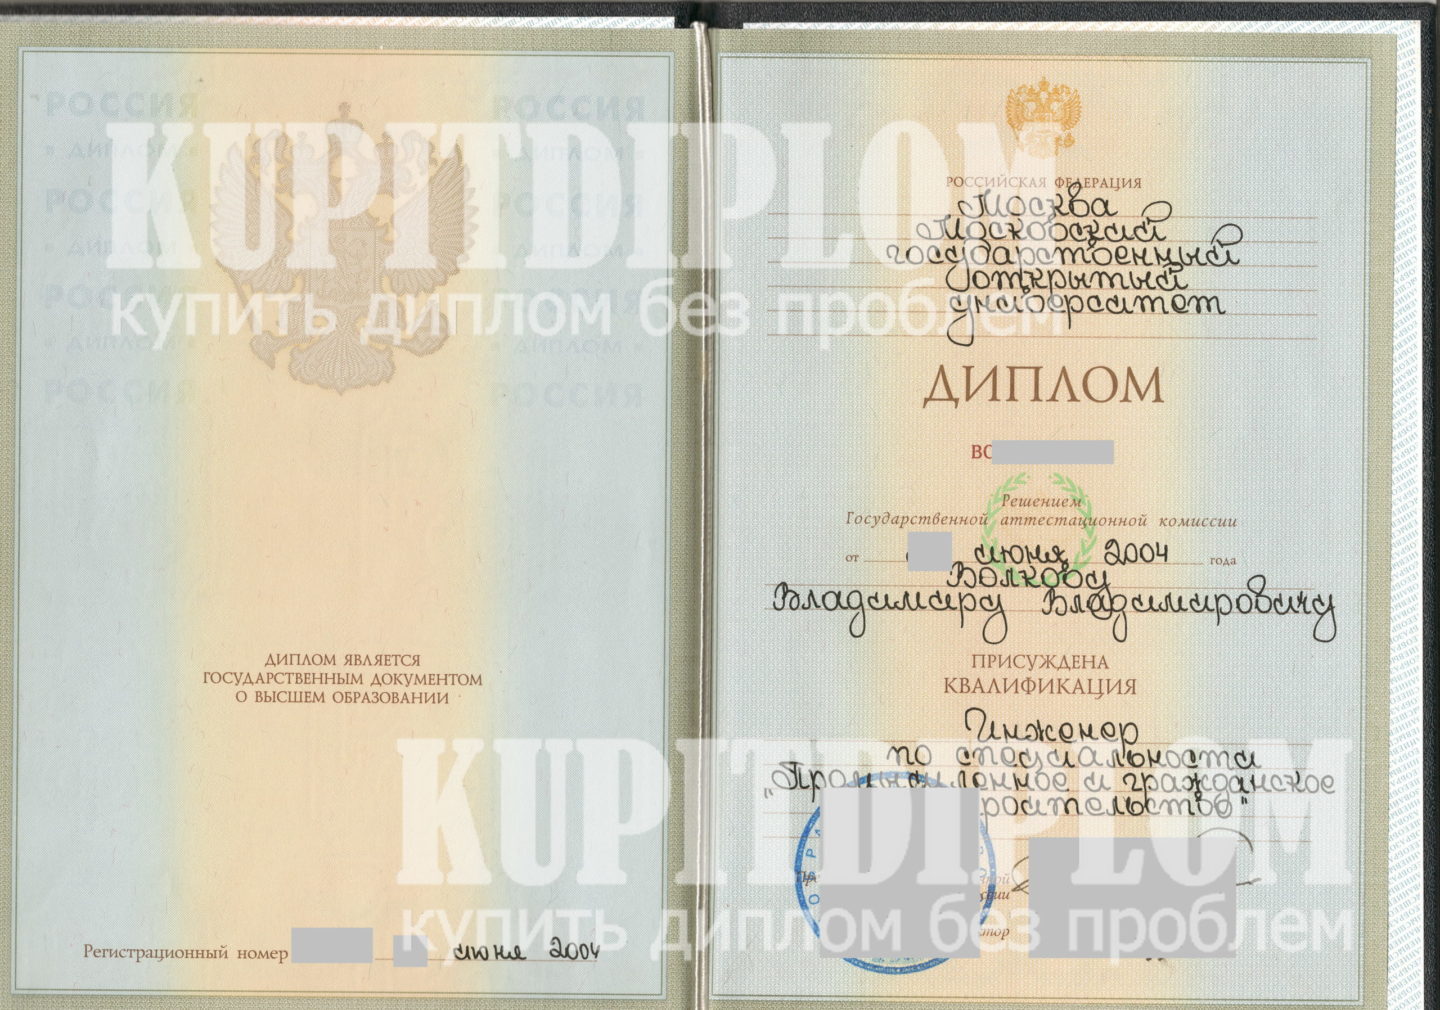 Титул диплома МГОУ ПГС 2004 года с настоящего образца